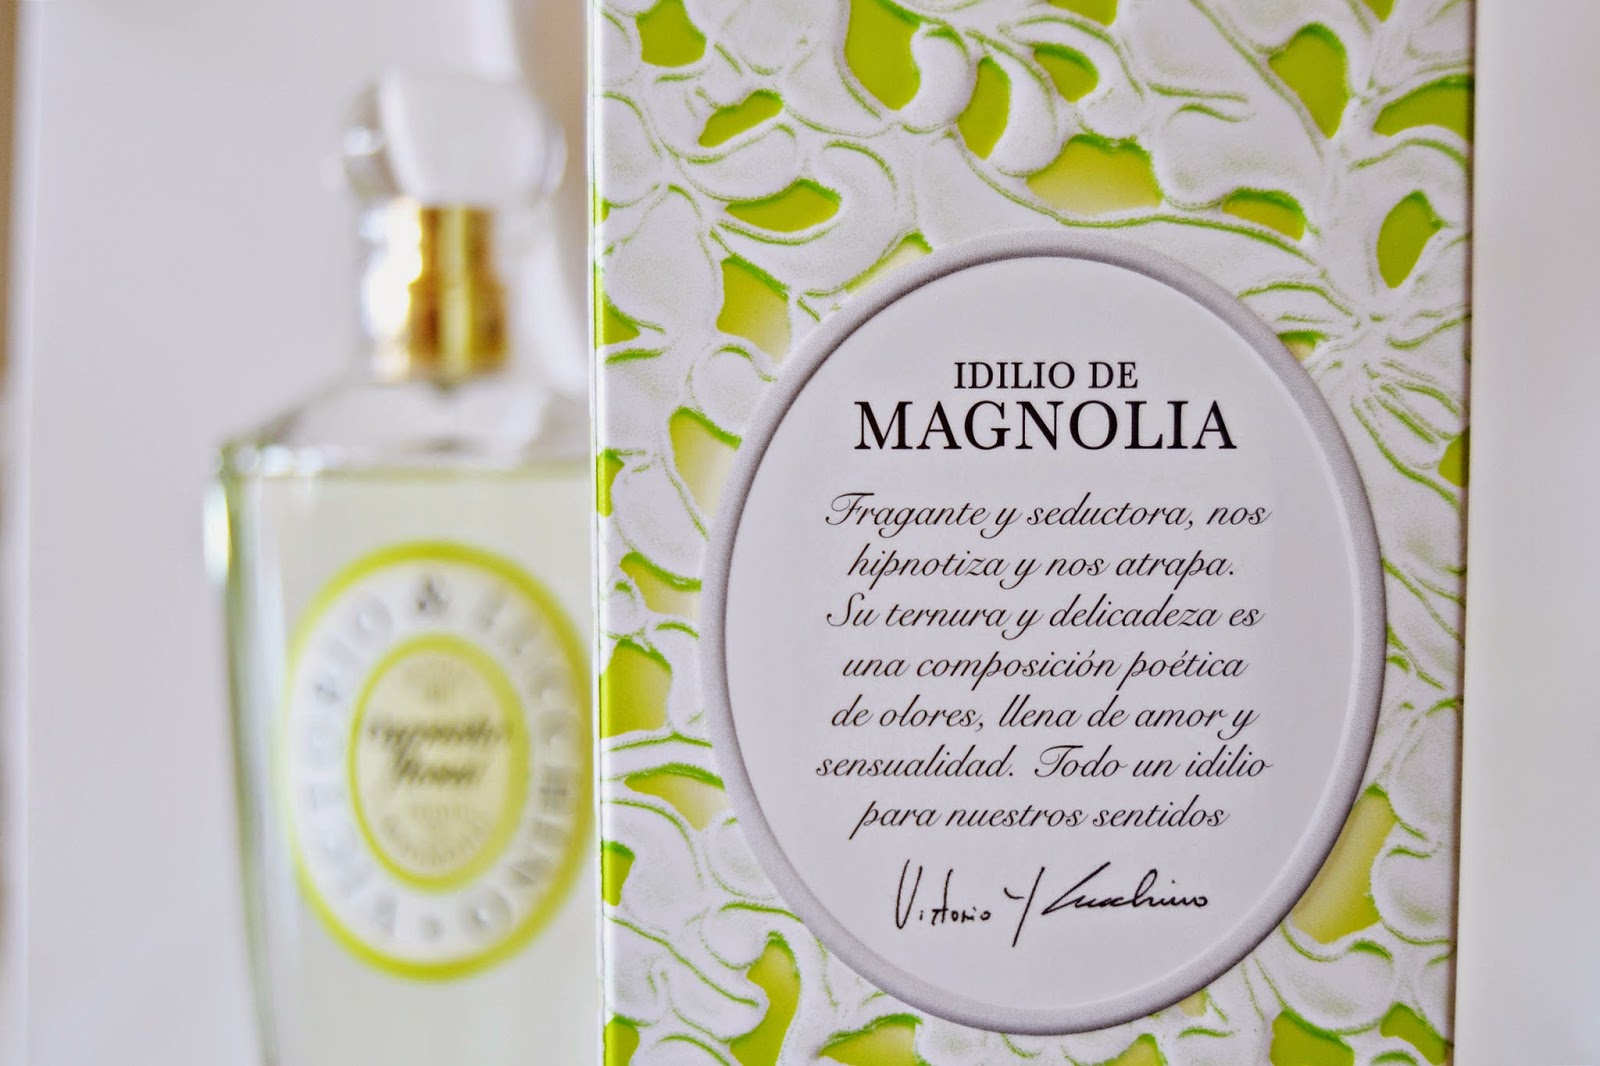 perfume idilio de magnolia de victorio y lucchino perfume de novia blog bodas mi boda gratis